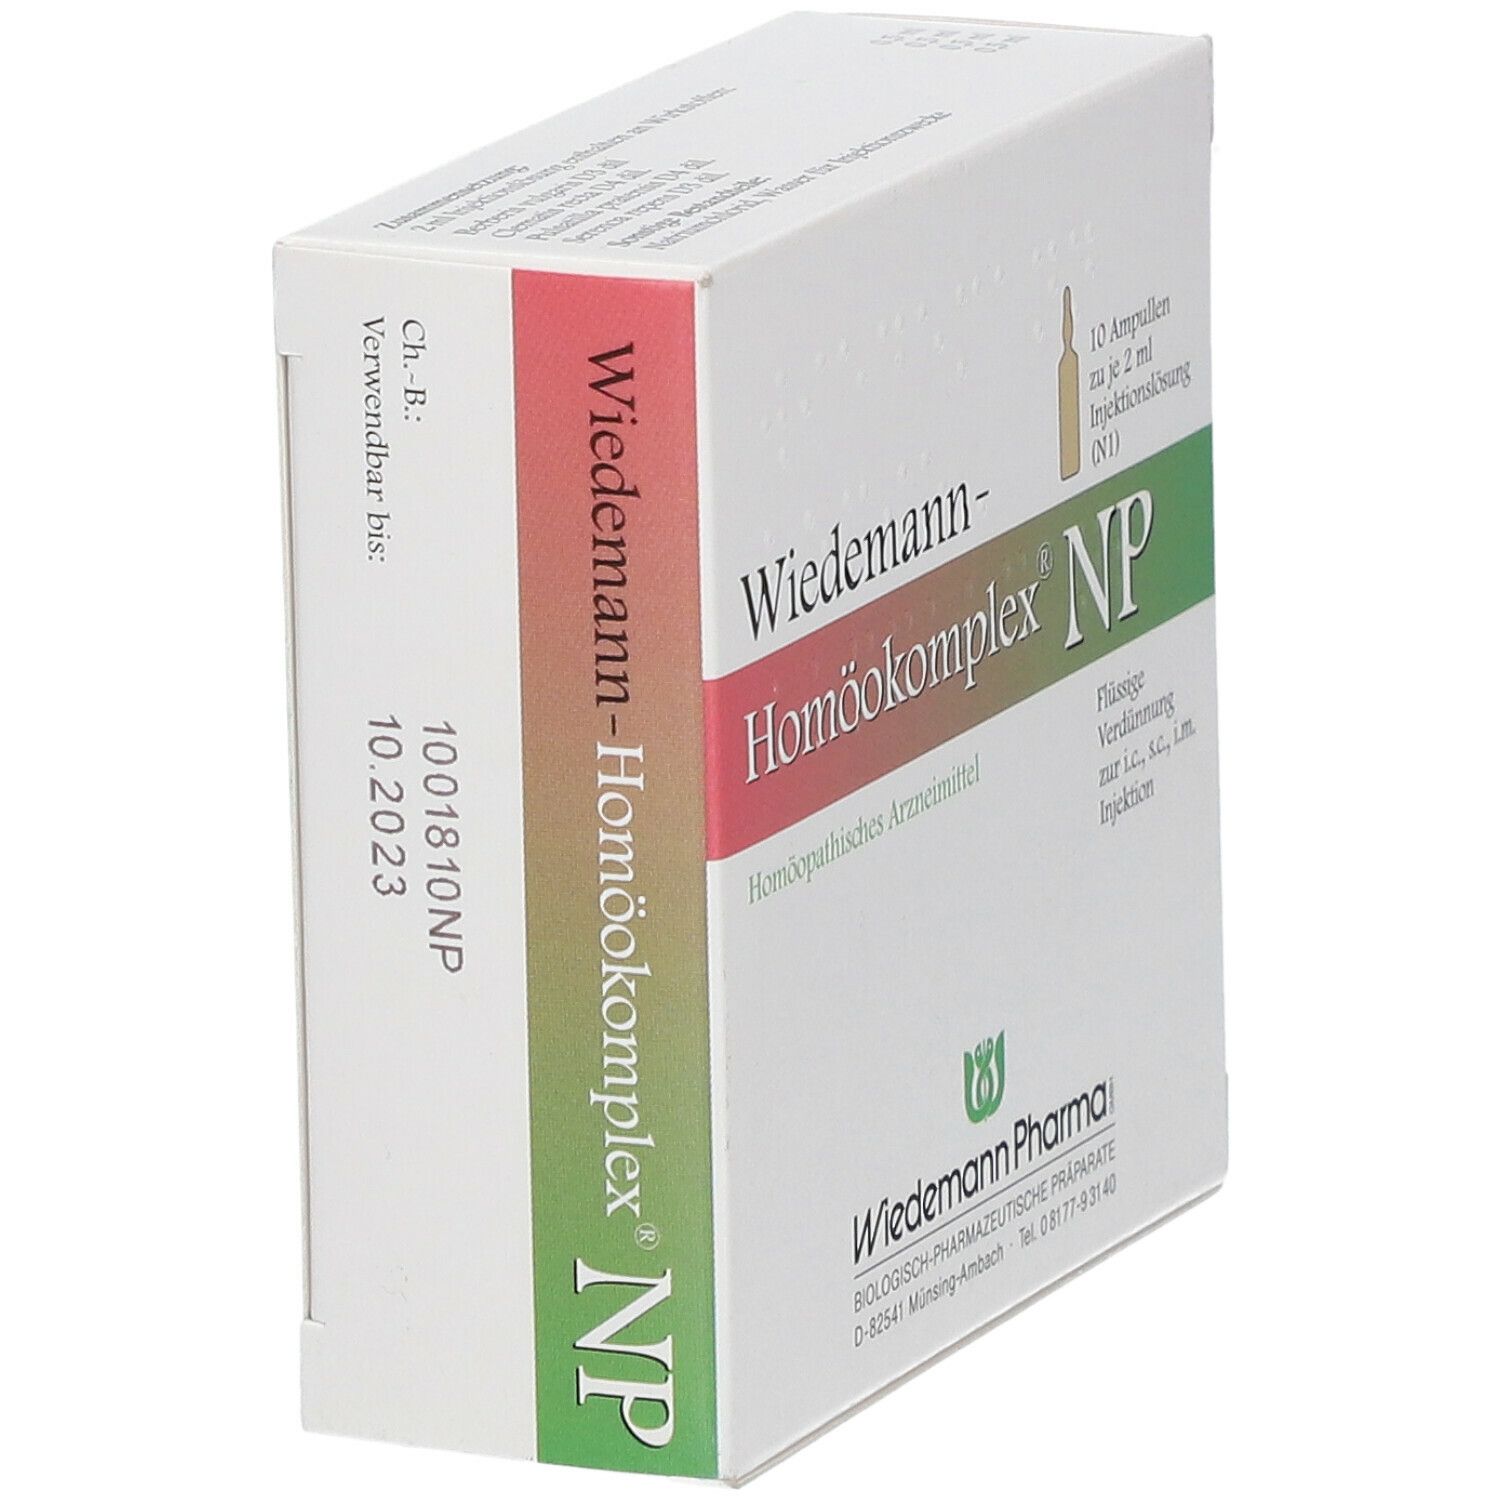 Wiedemann-Homöokomplex Np® Ampullen